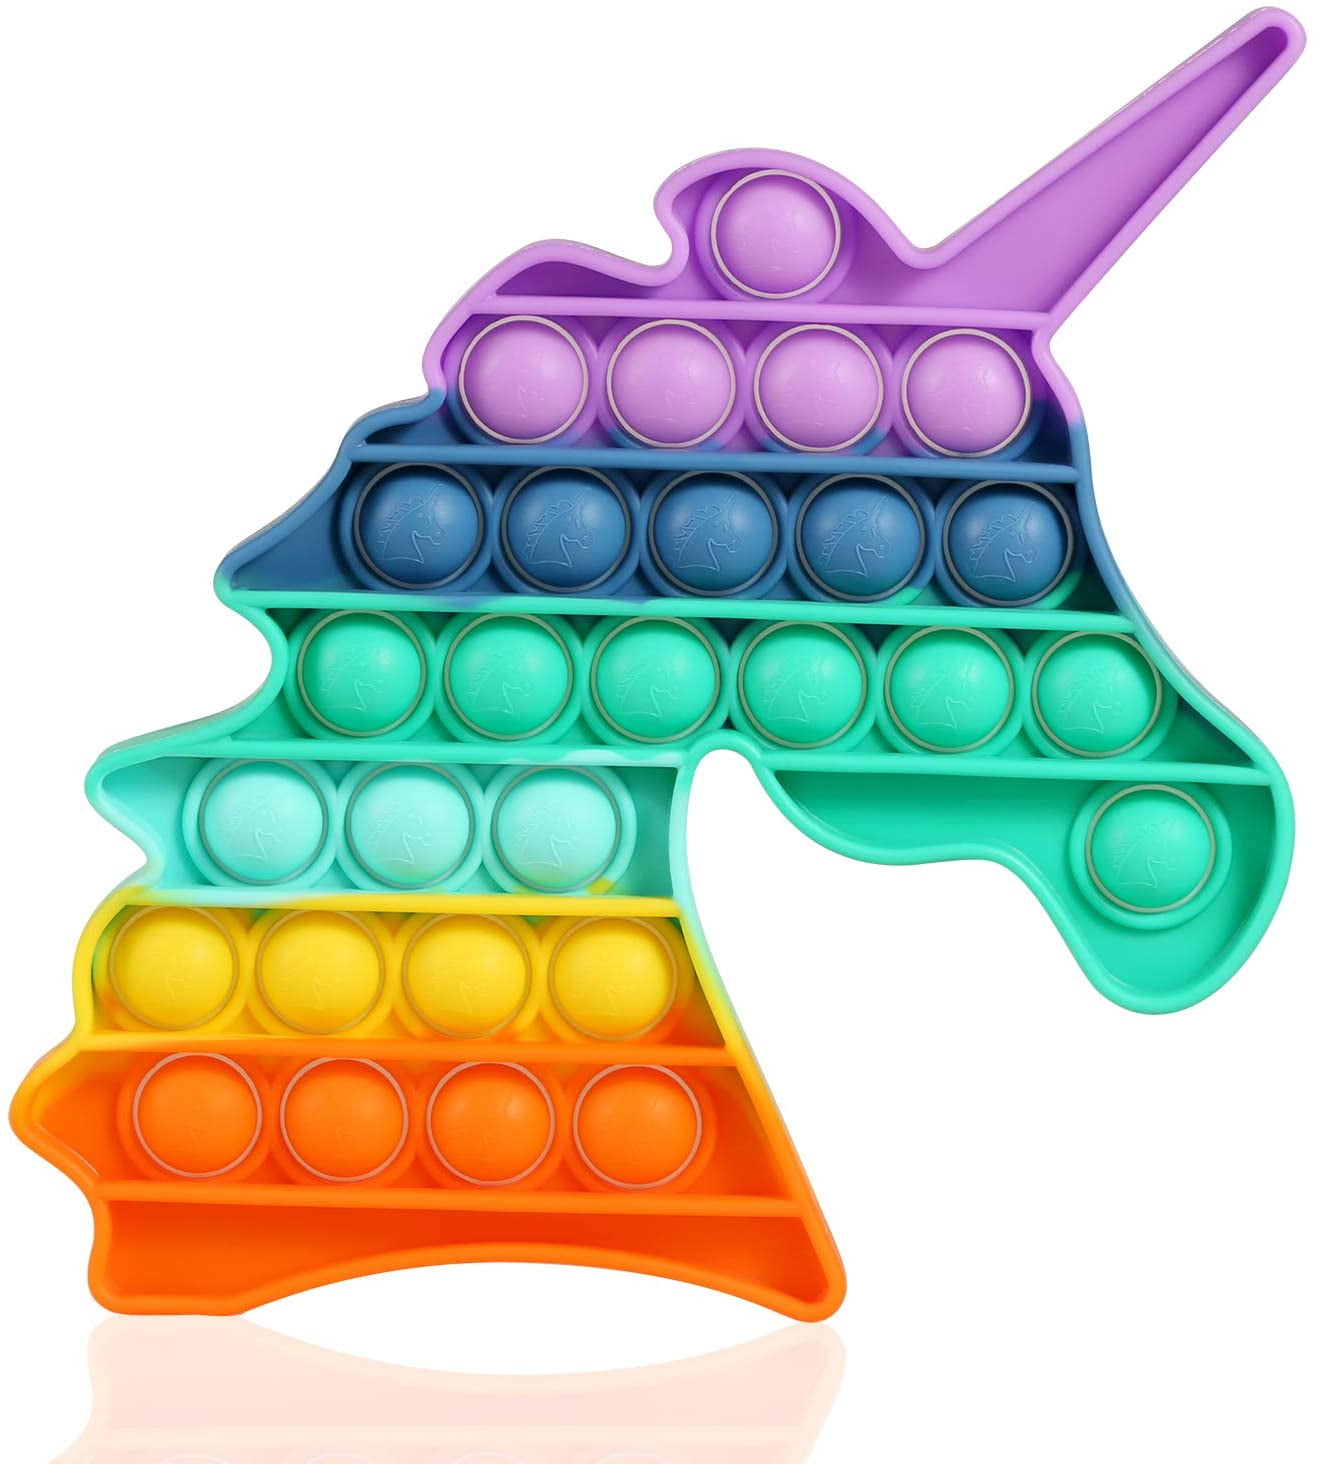 Details about   Bubble It Silicone Sensory Fidget Rainbow Toy Autism Stress Relief Game US